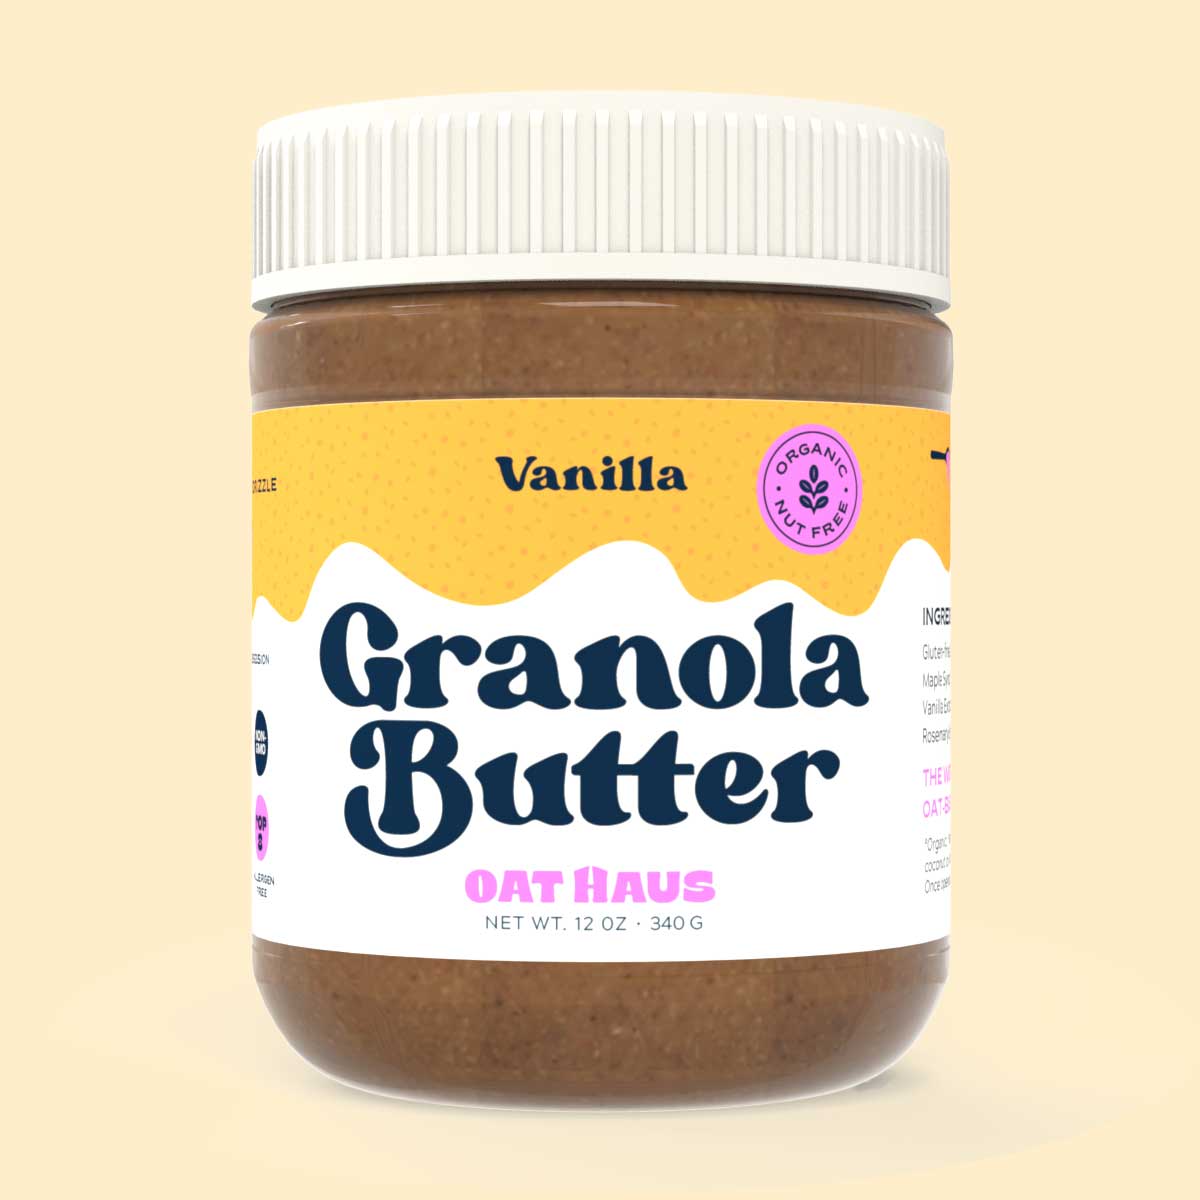 Vanilla Granola Butter | Nut-free, Vegan, GF Spread